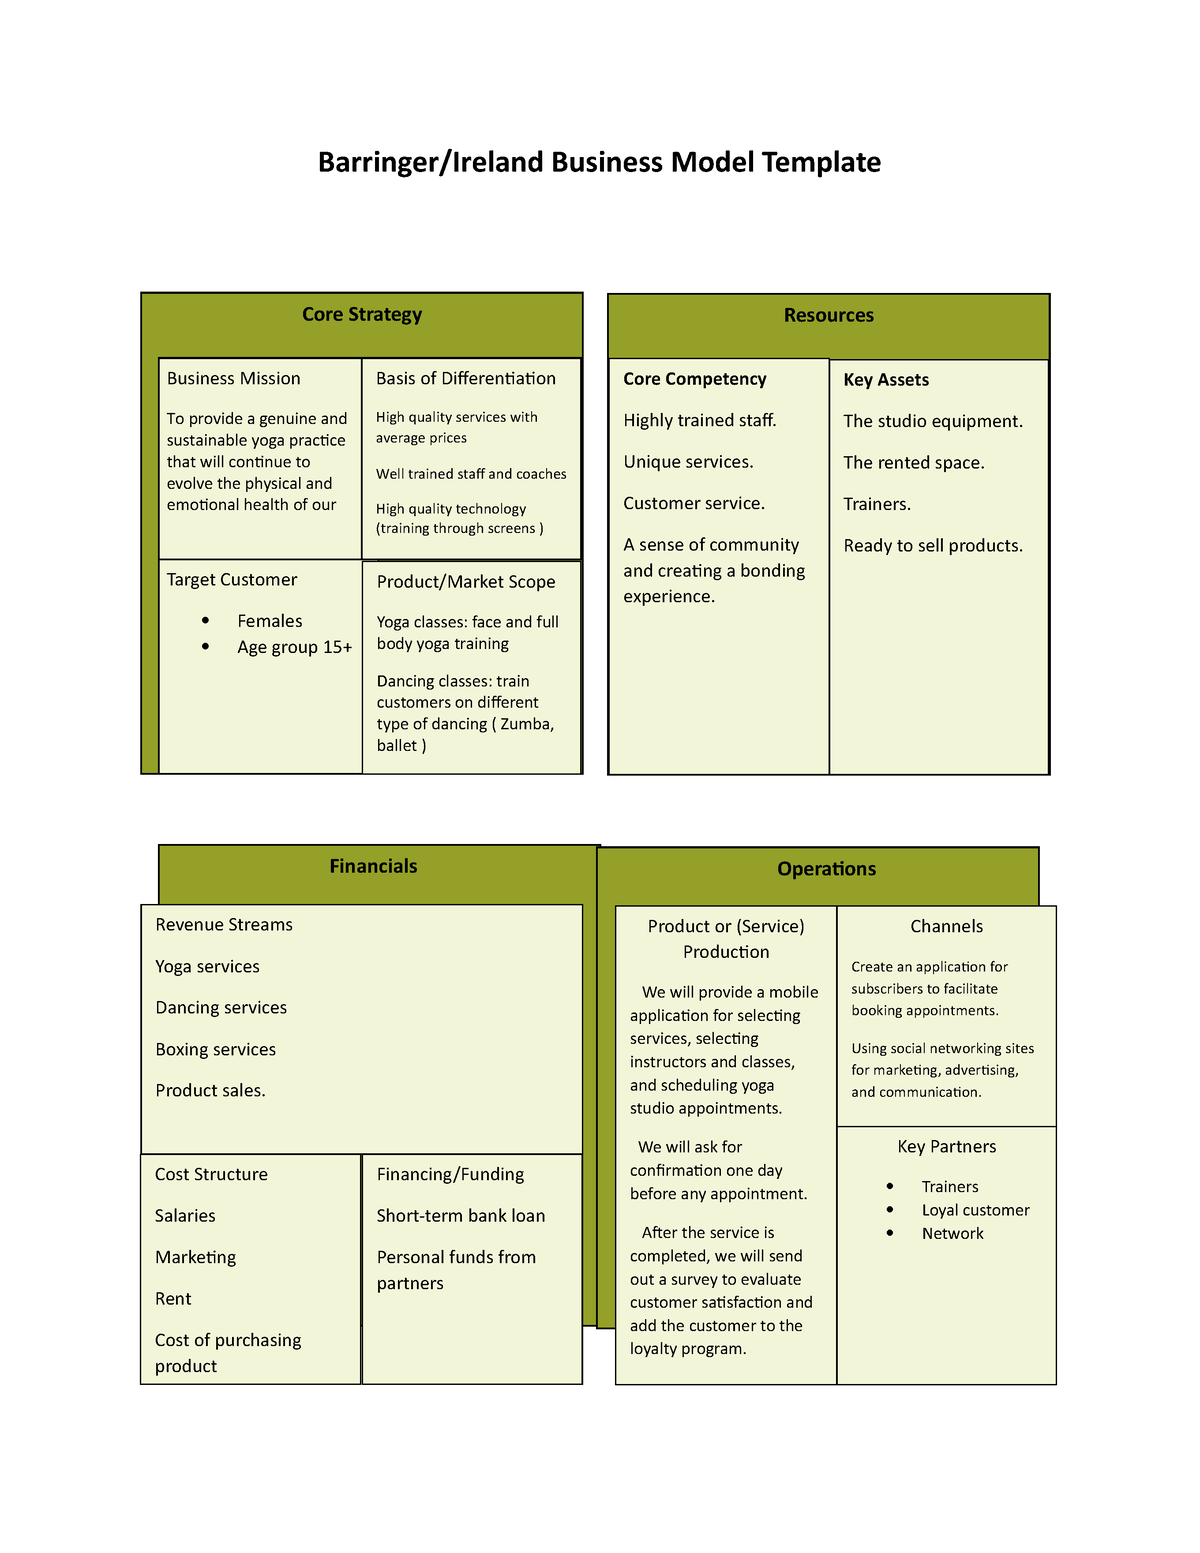 buisness-model-template-3-barringer-ireland-business-model-template